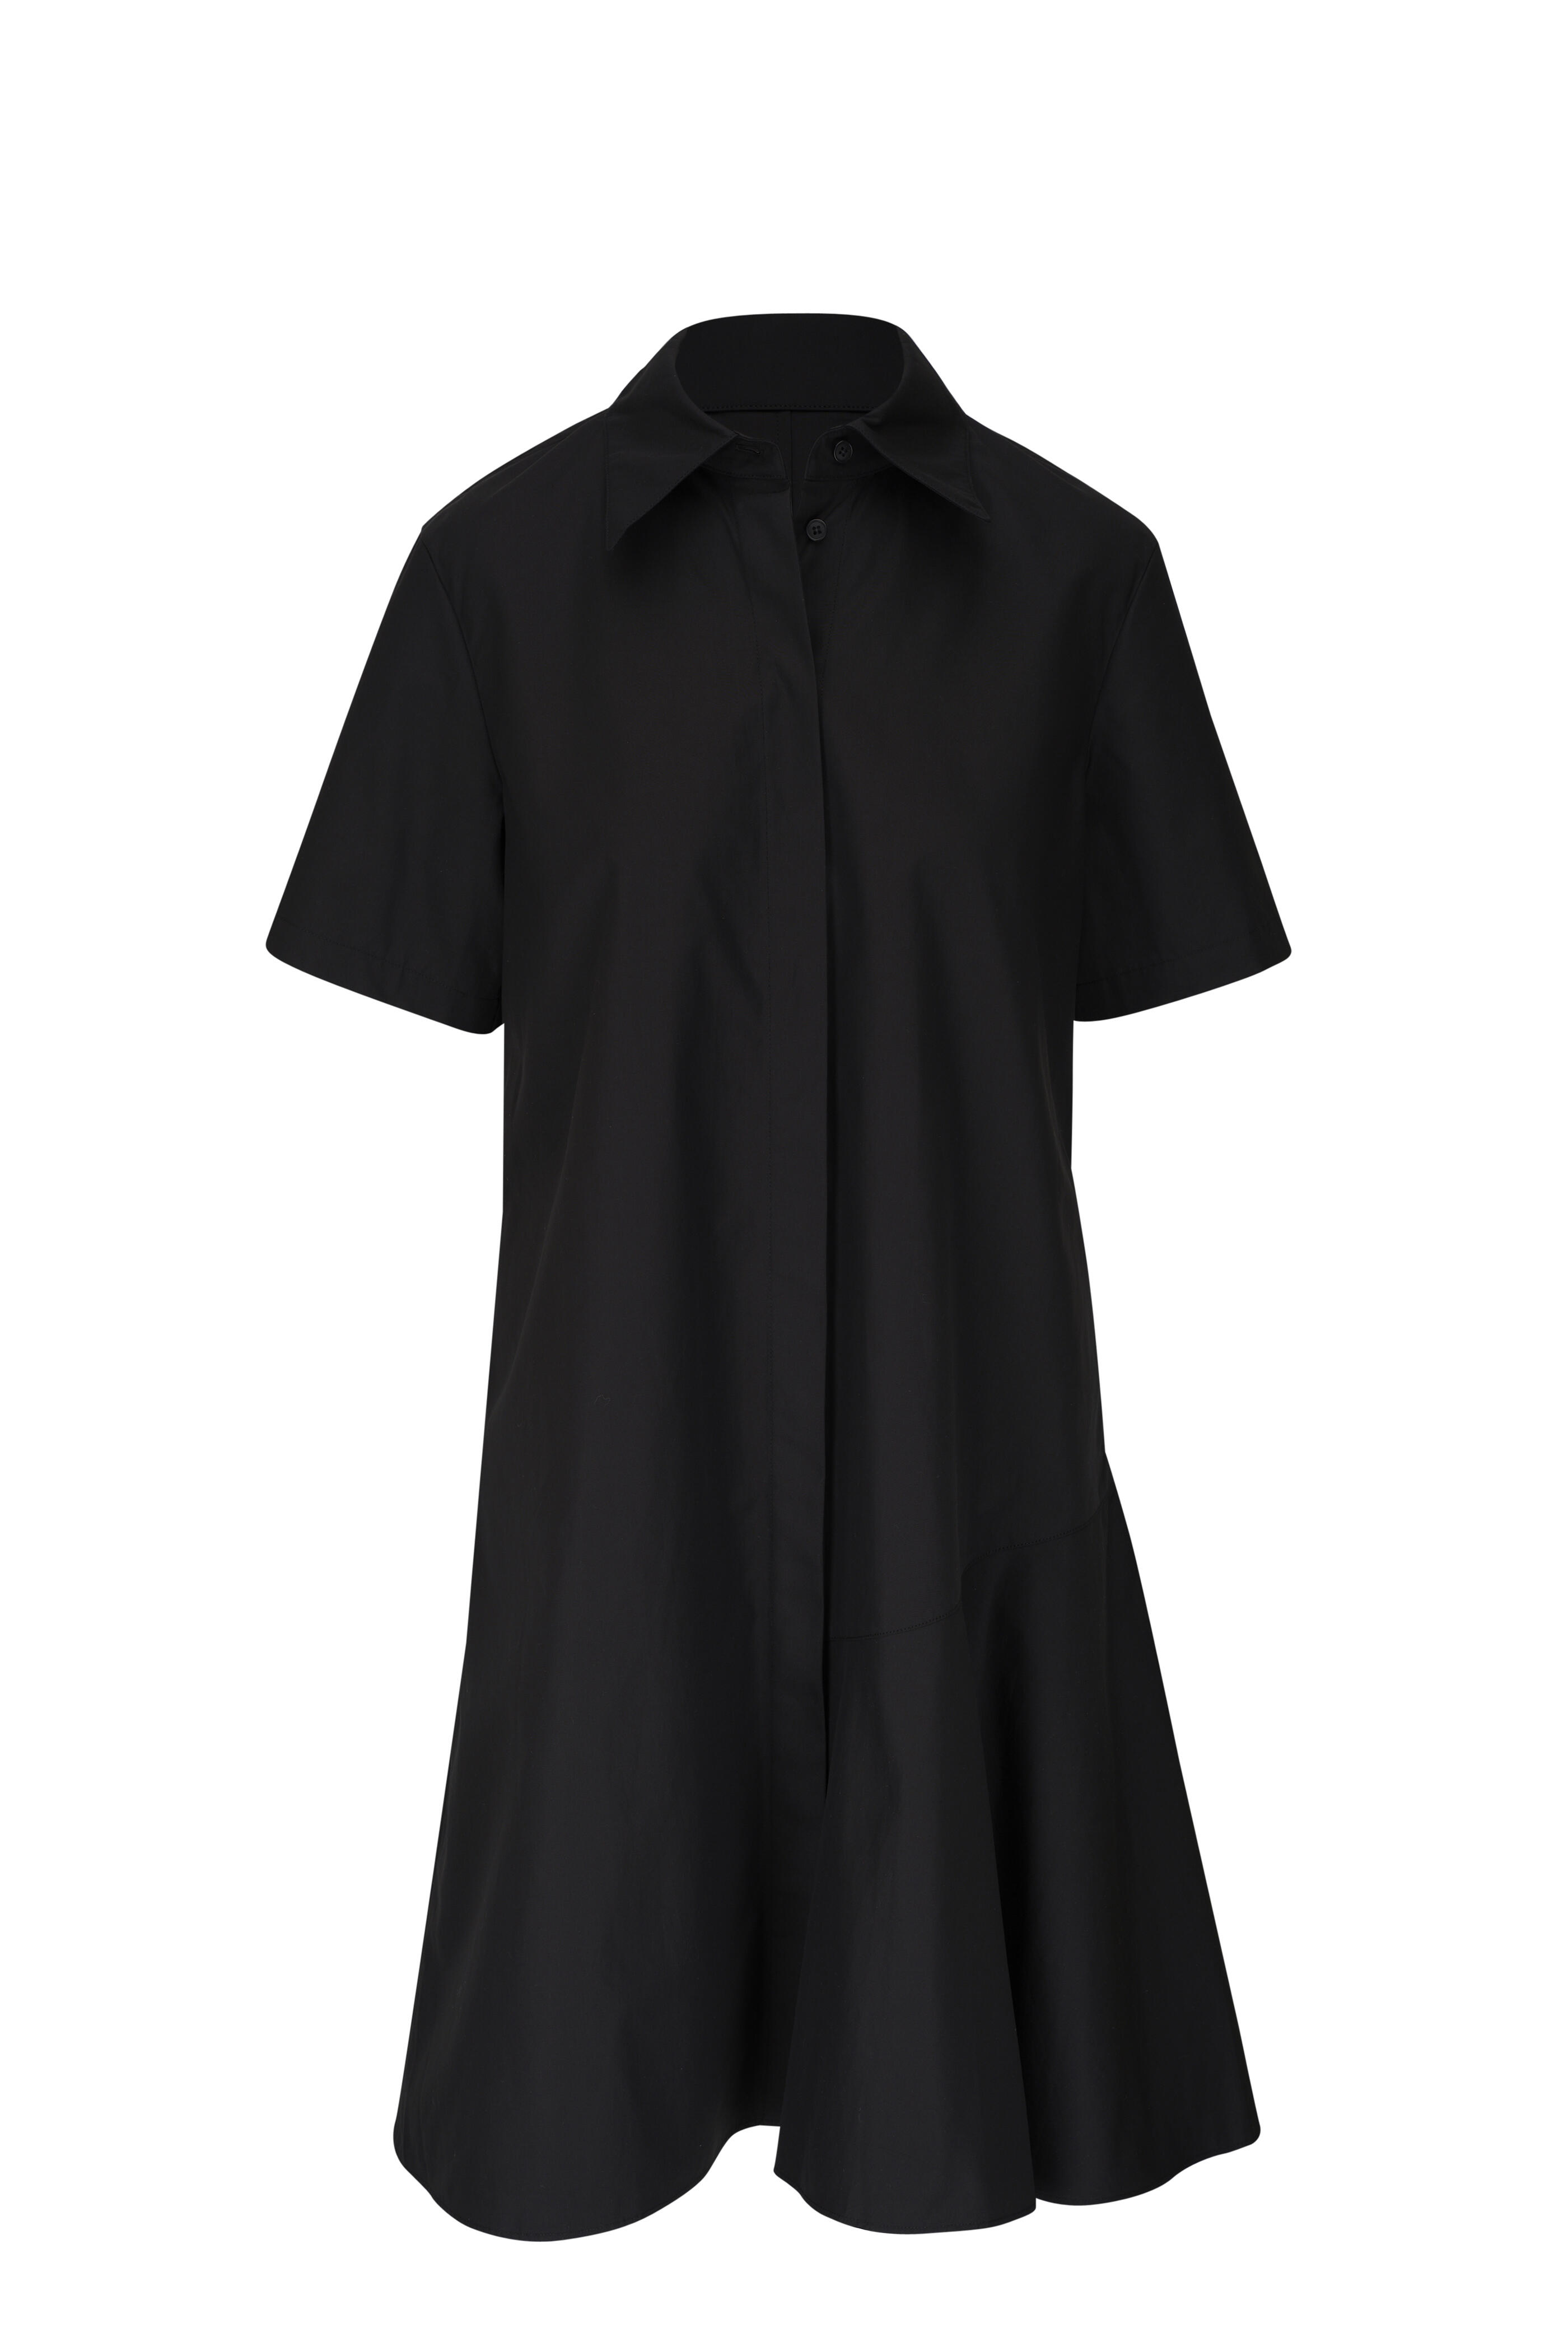 Lafayette 148 New York - Black Flounce Hem Shirt Dress